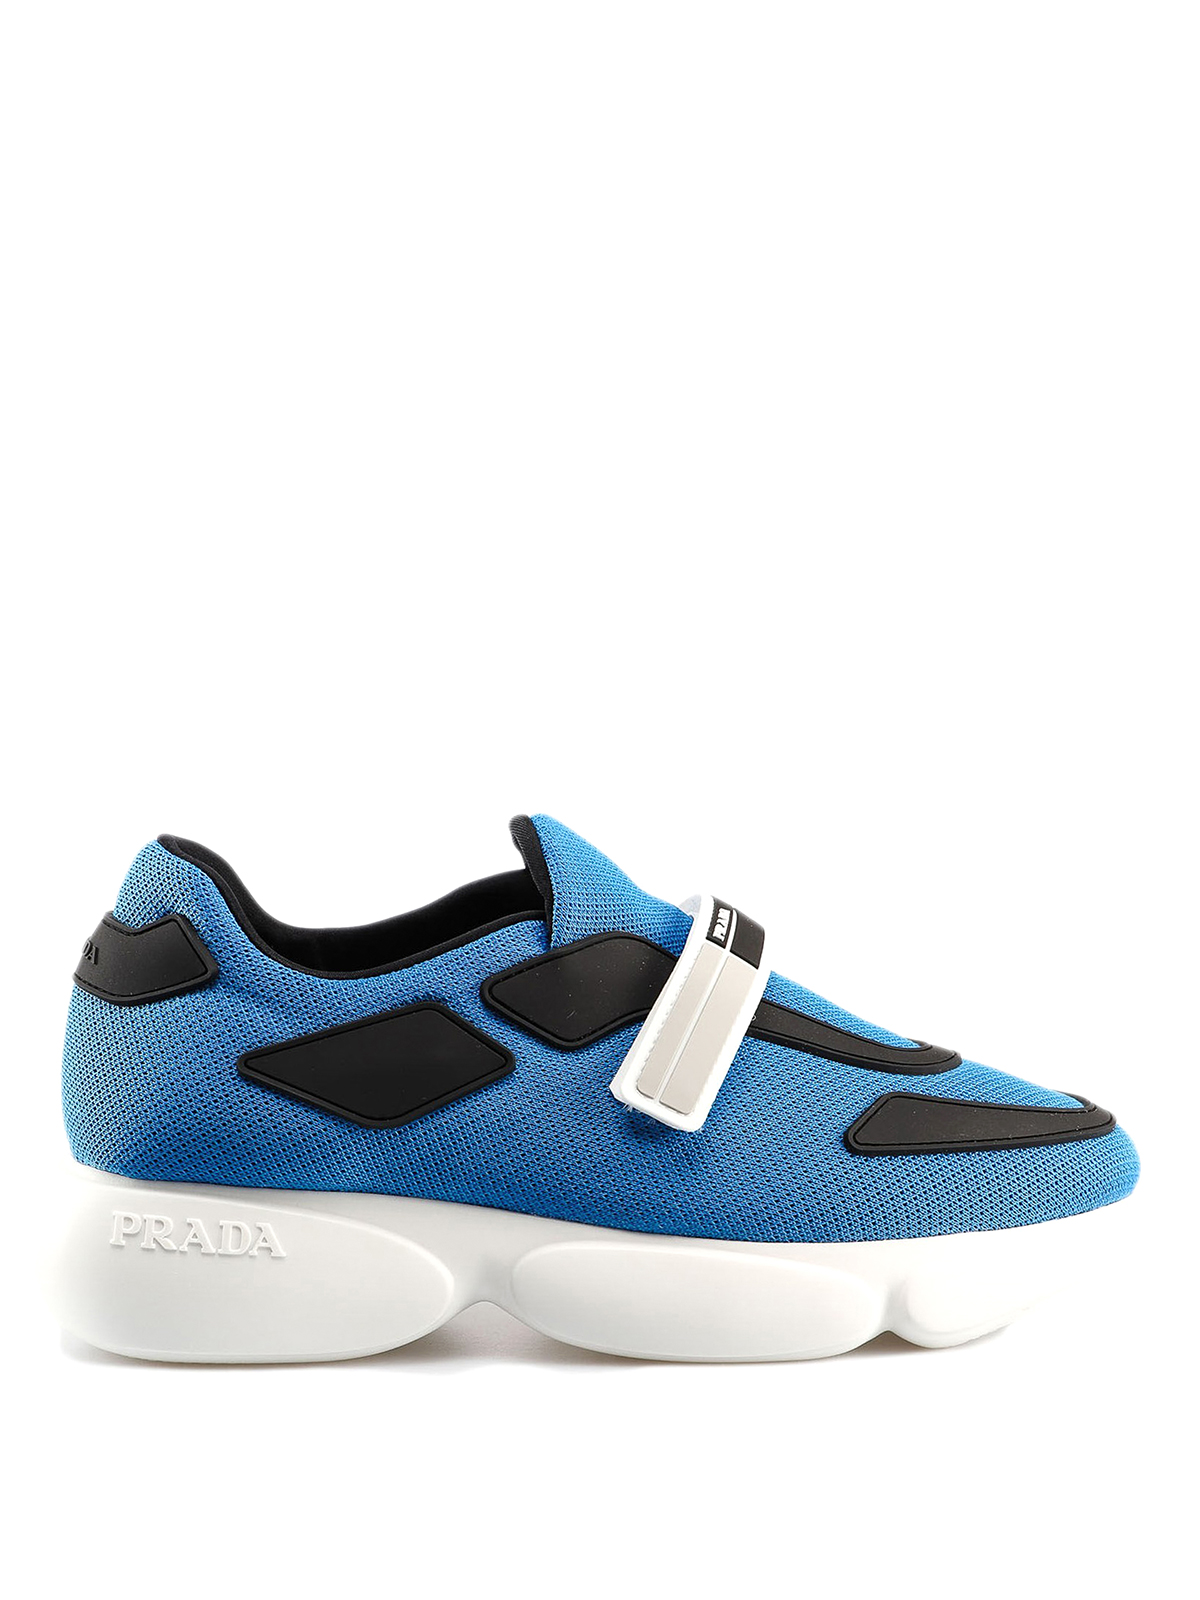 Trainers Prada - Cloudbust blue fabric sneakers - 1E293I3V70013